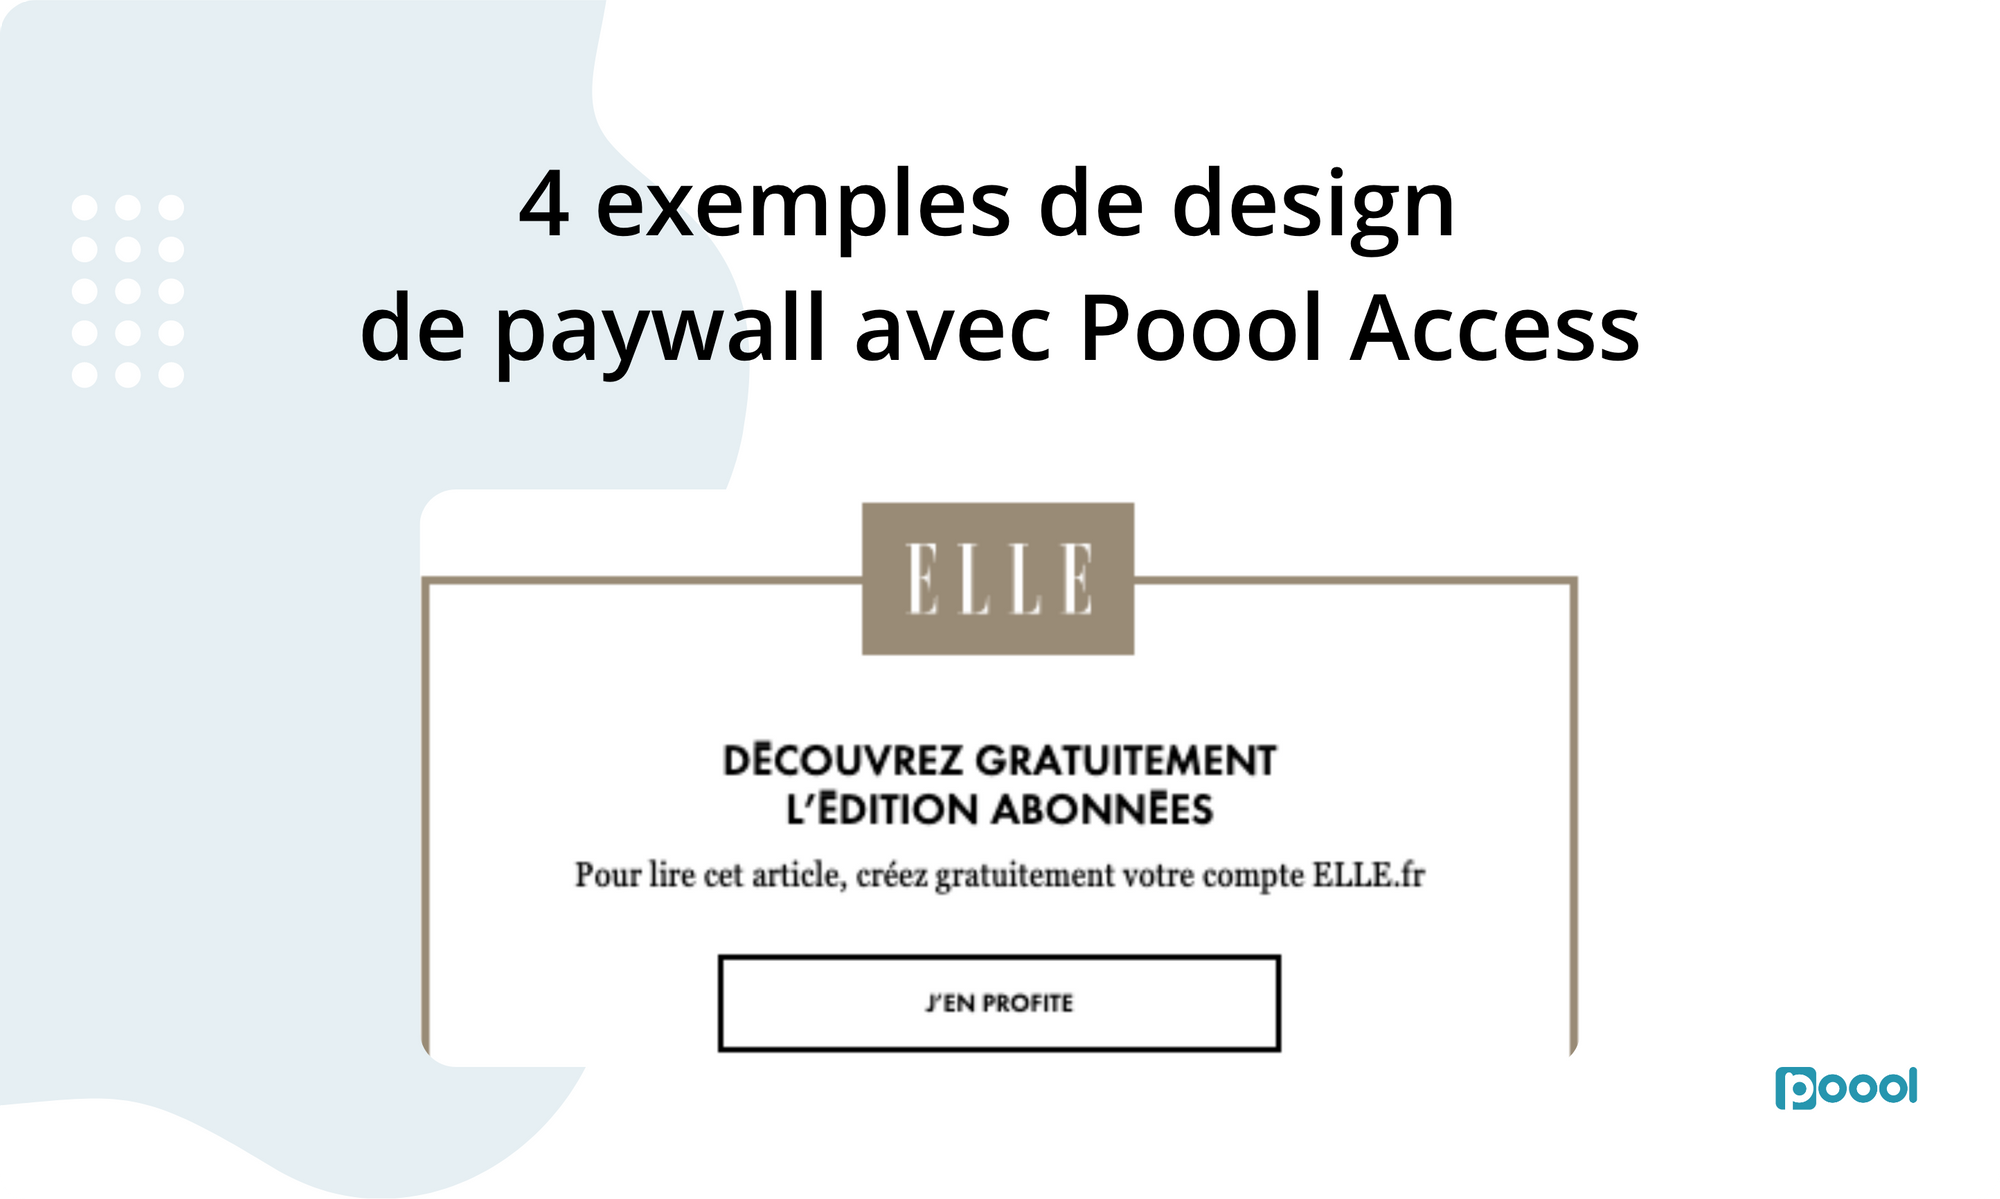 4 Exemples de Design de Paywall avec Poool Access.